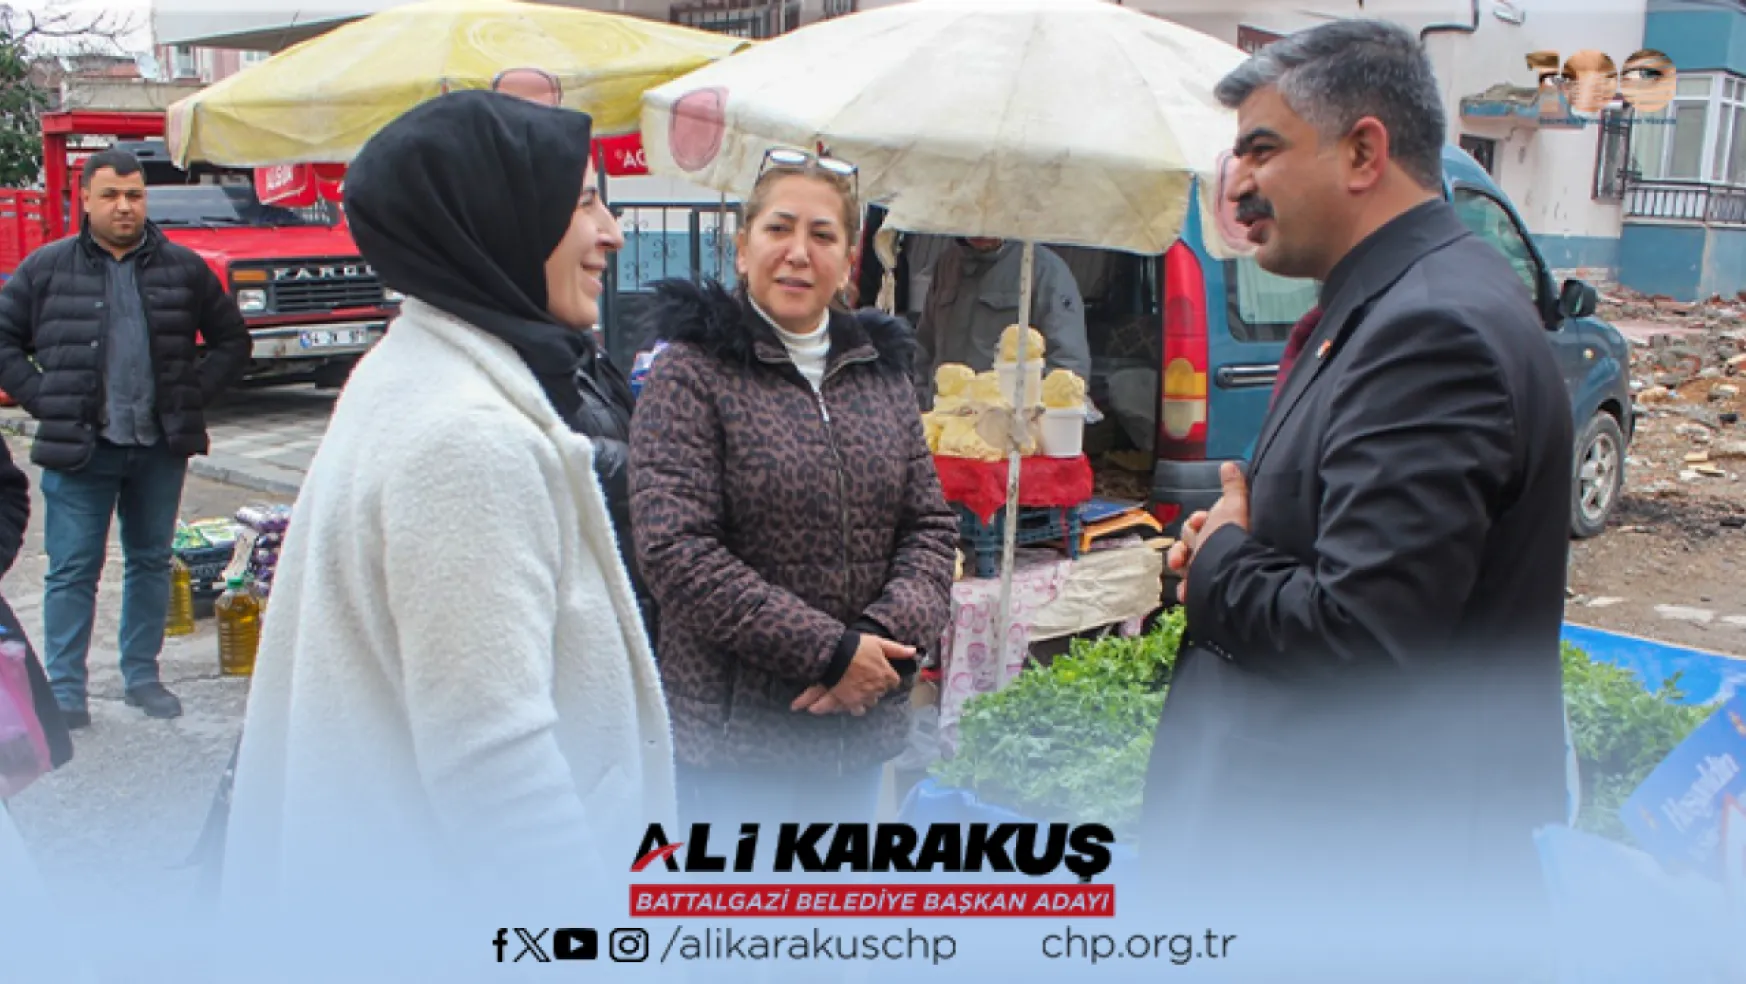 Karakuş: 'Battalgazi ilçemize aşığım'